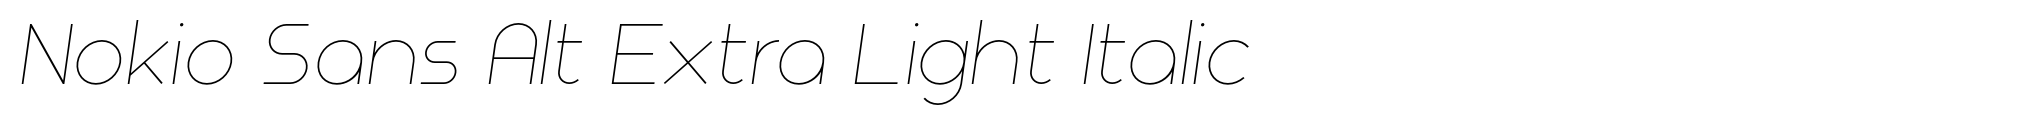 Nokio Sans Alt Extra Light Italic image